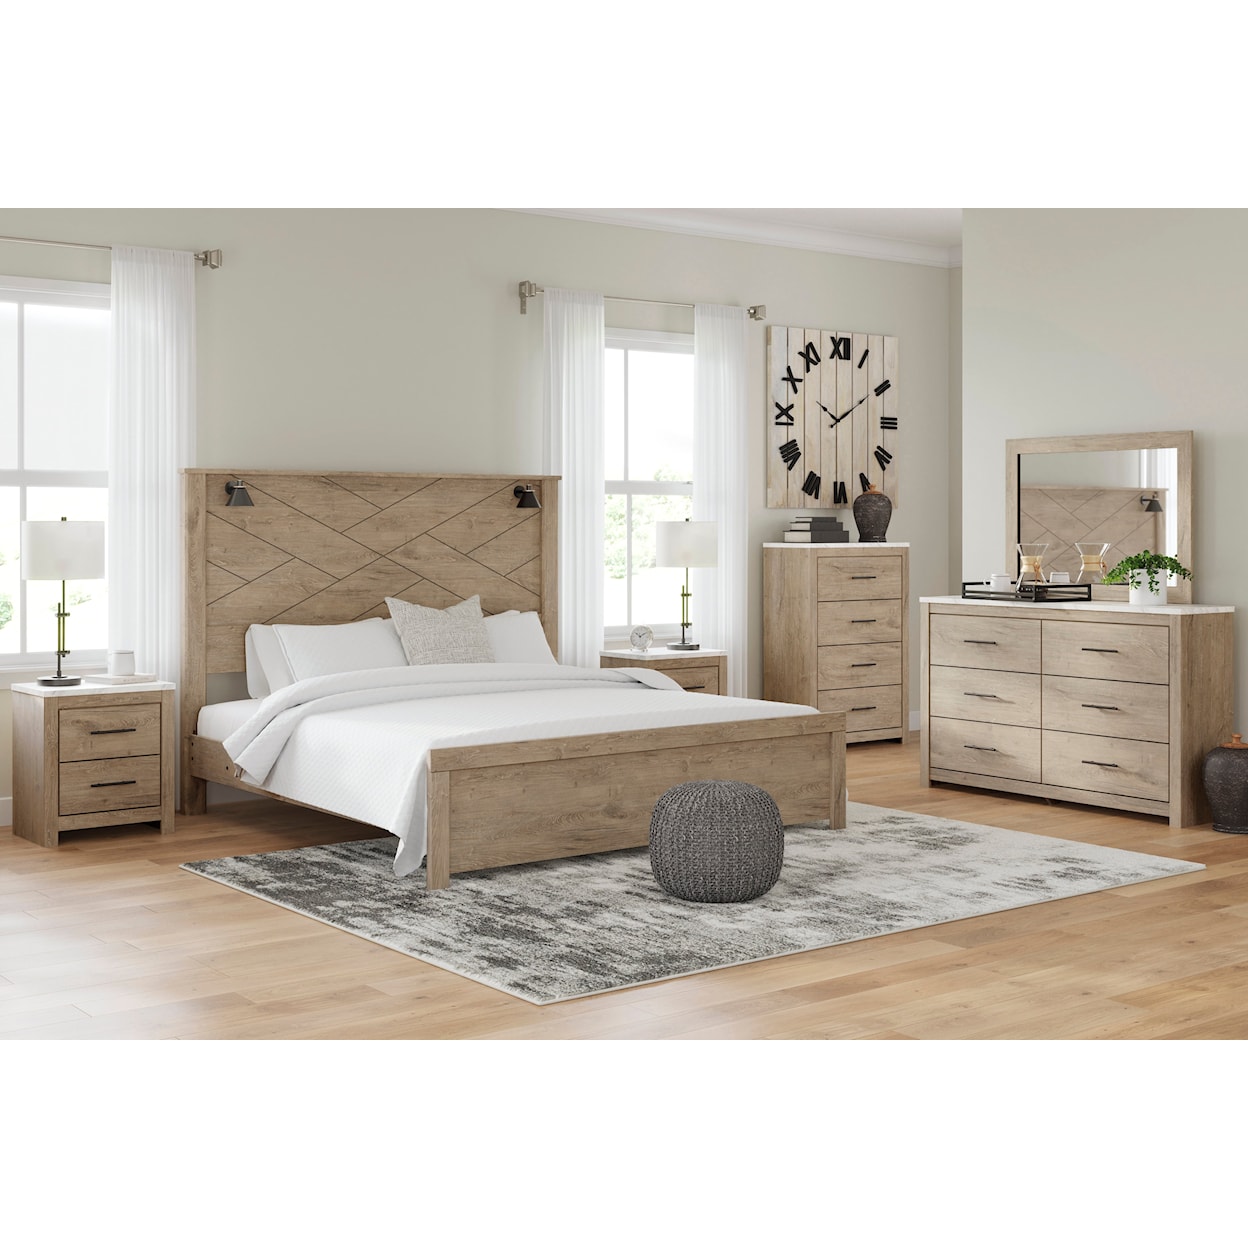 Ashley Furniture Signature Design Senniberg King Bedroom Set